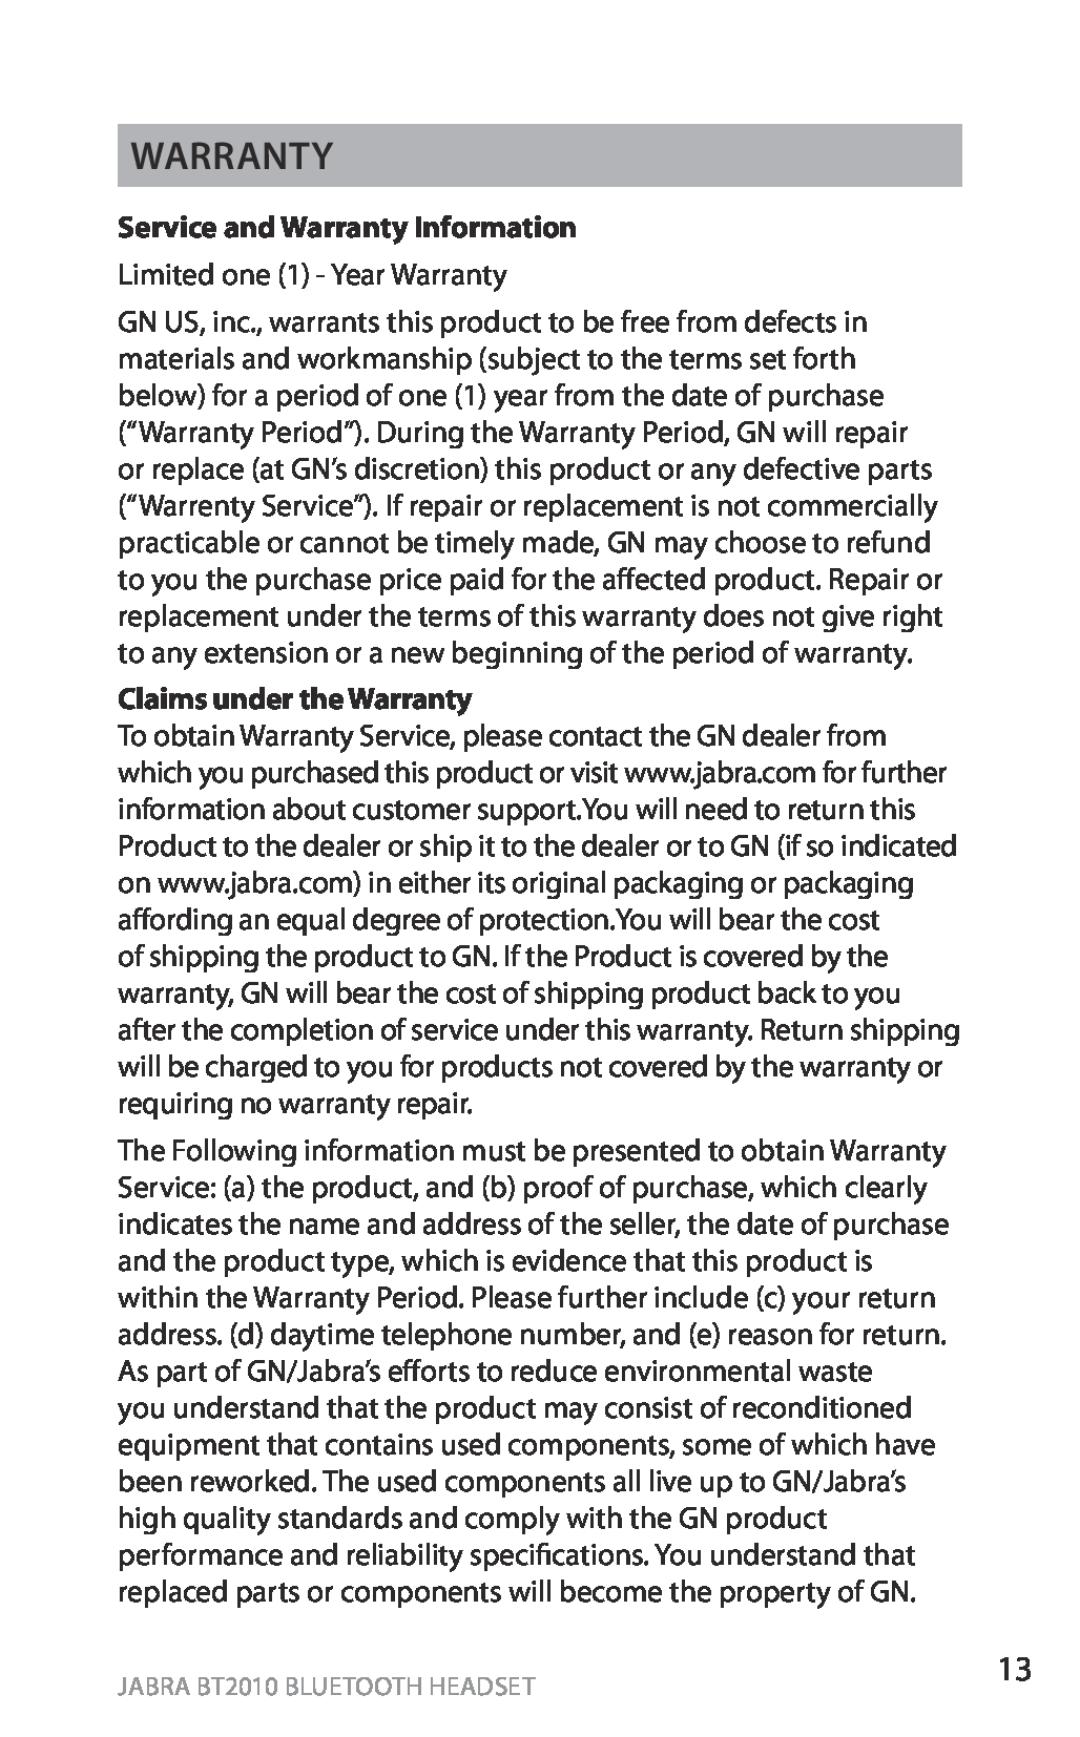 Jabra Service and Warranty Information, Claims under the Warranty, english, Jabra BT2010 Bluetooth headset 